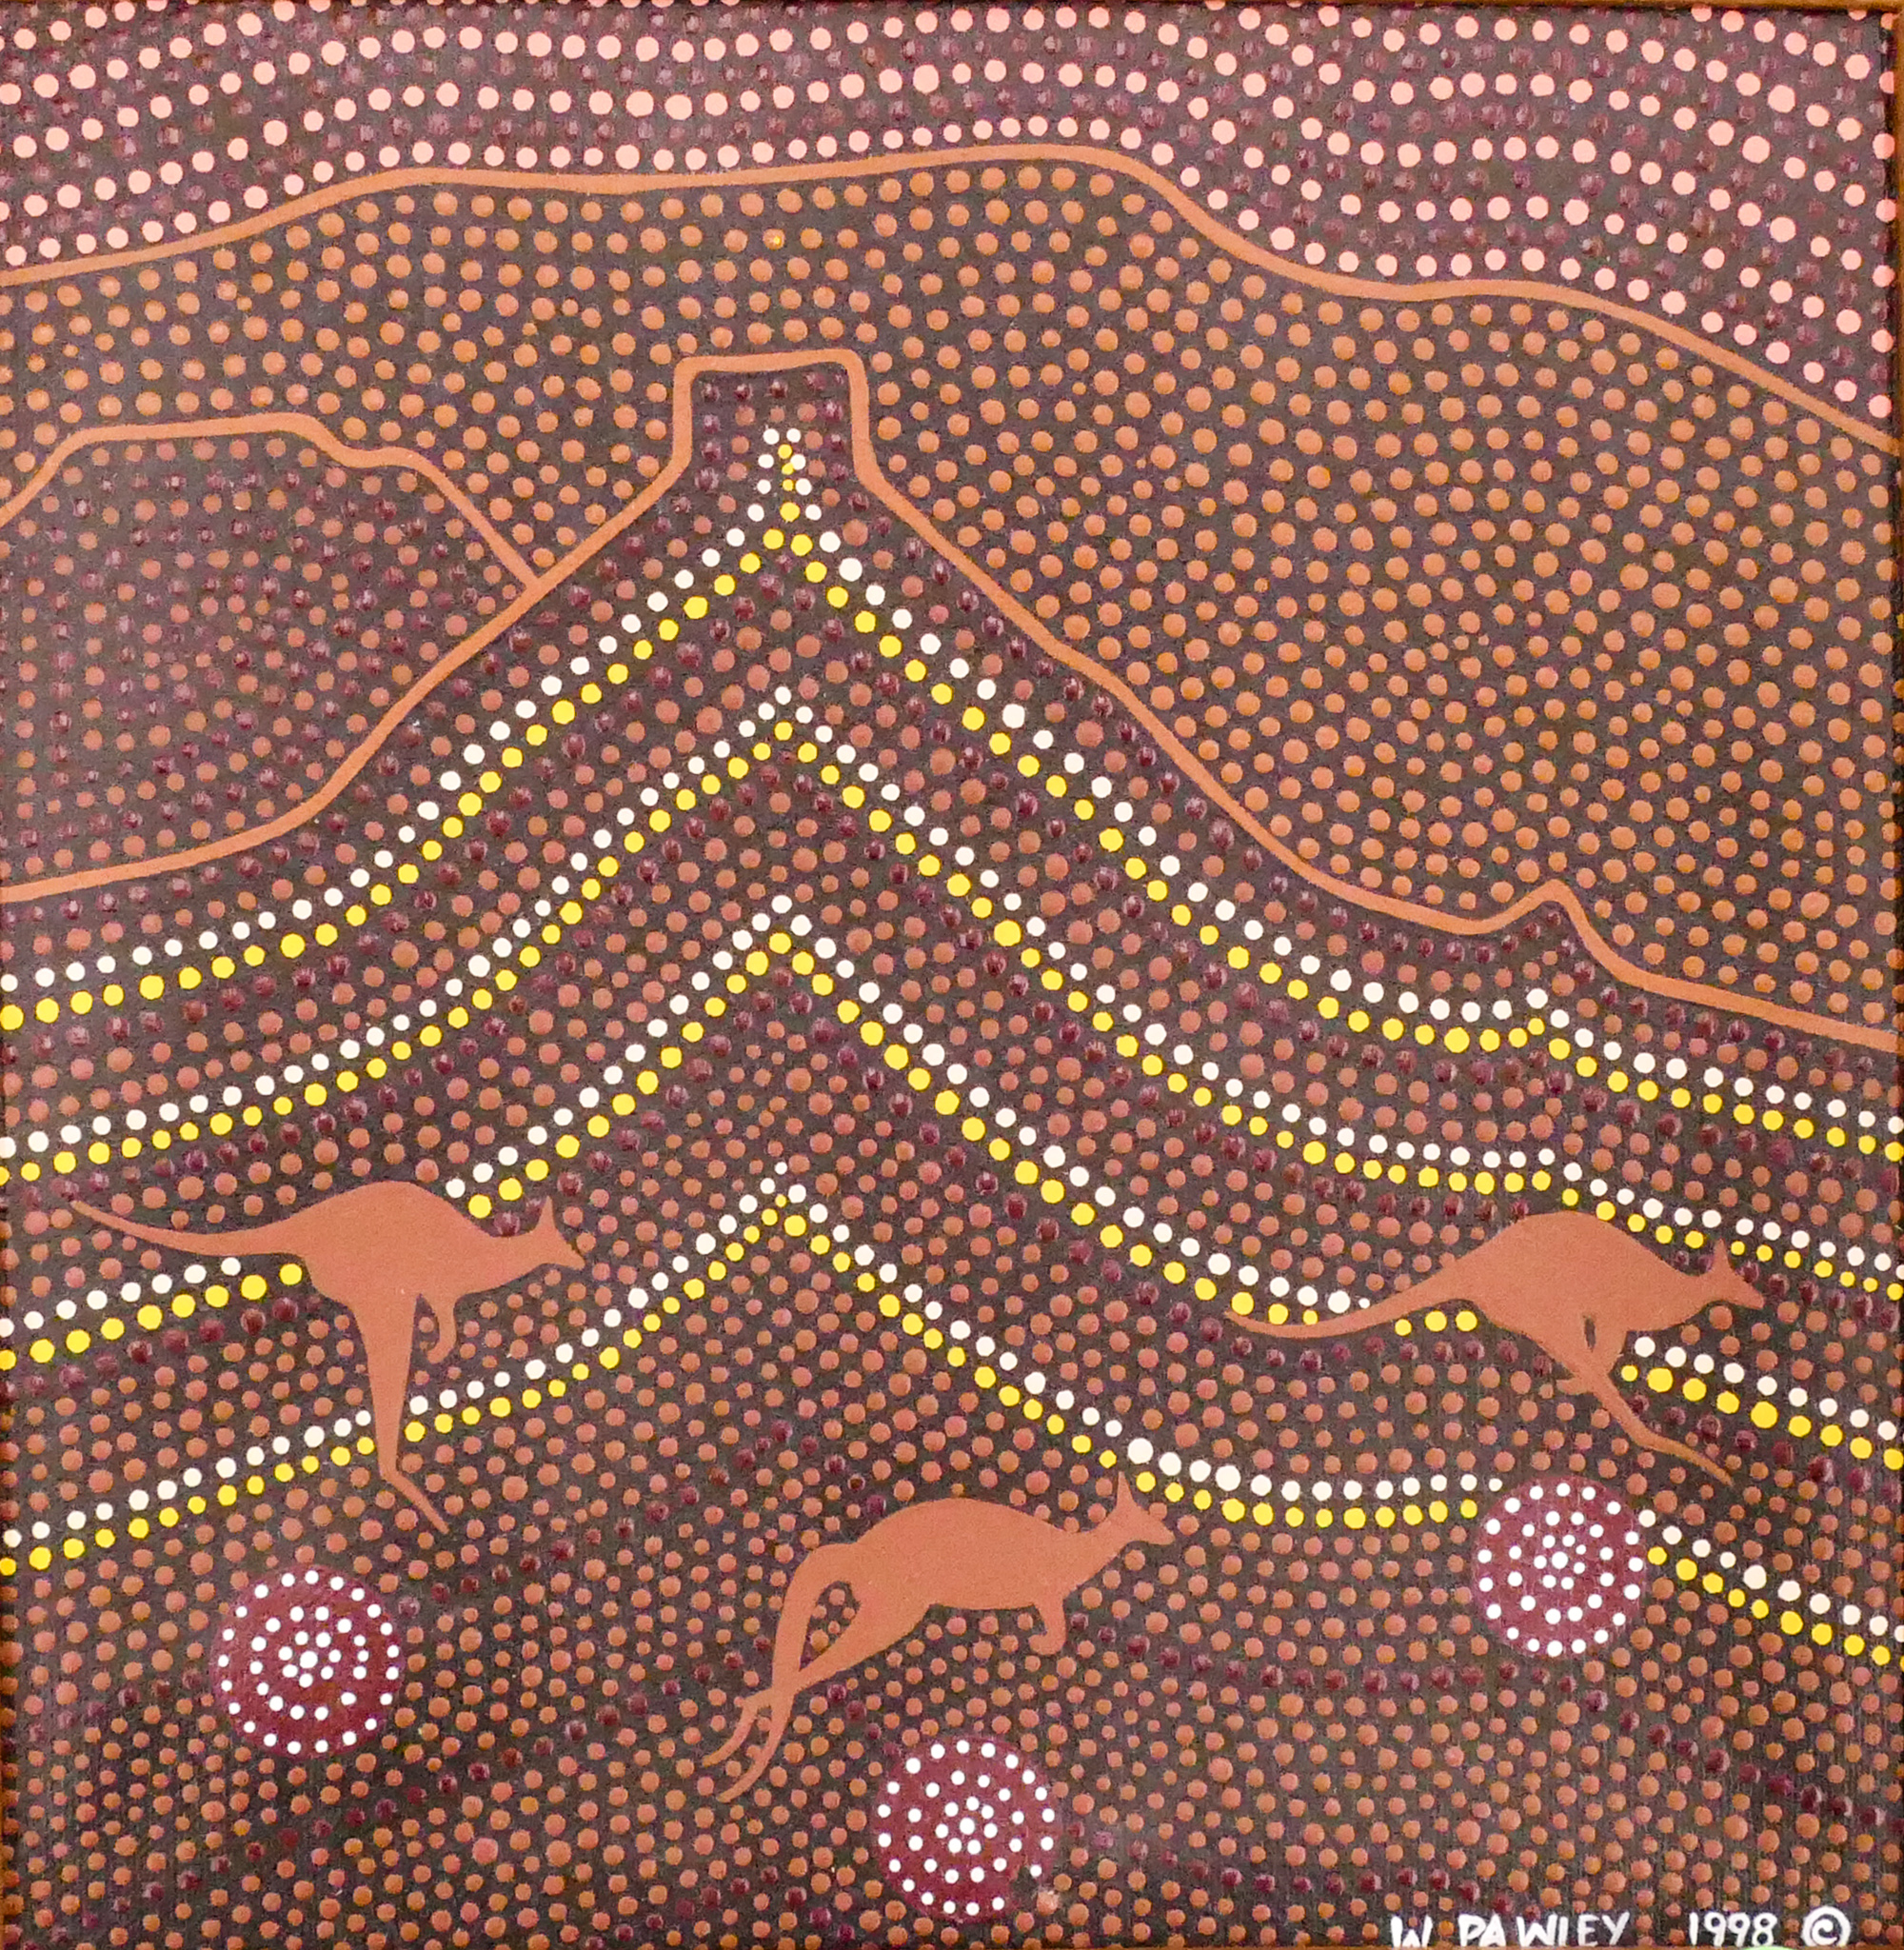 Wendy Pawley Koori Aboriginal Oil